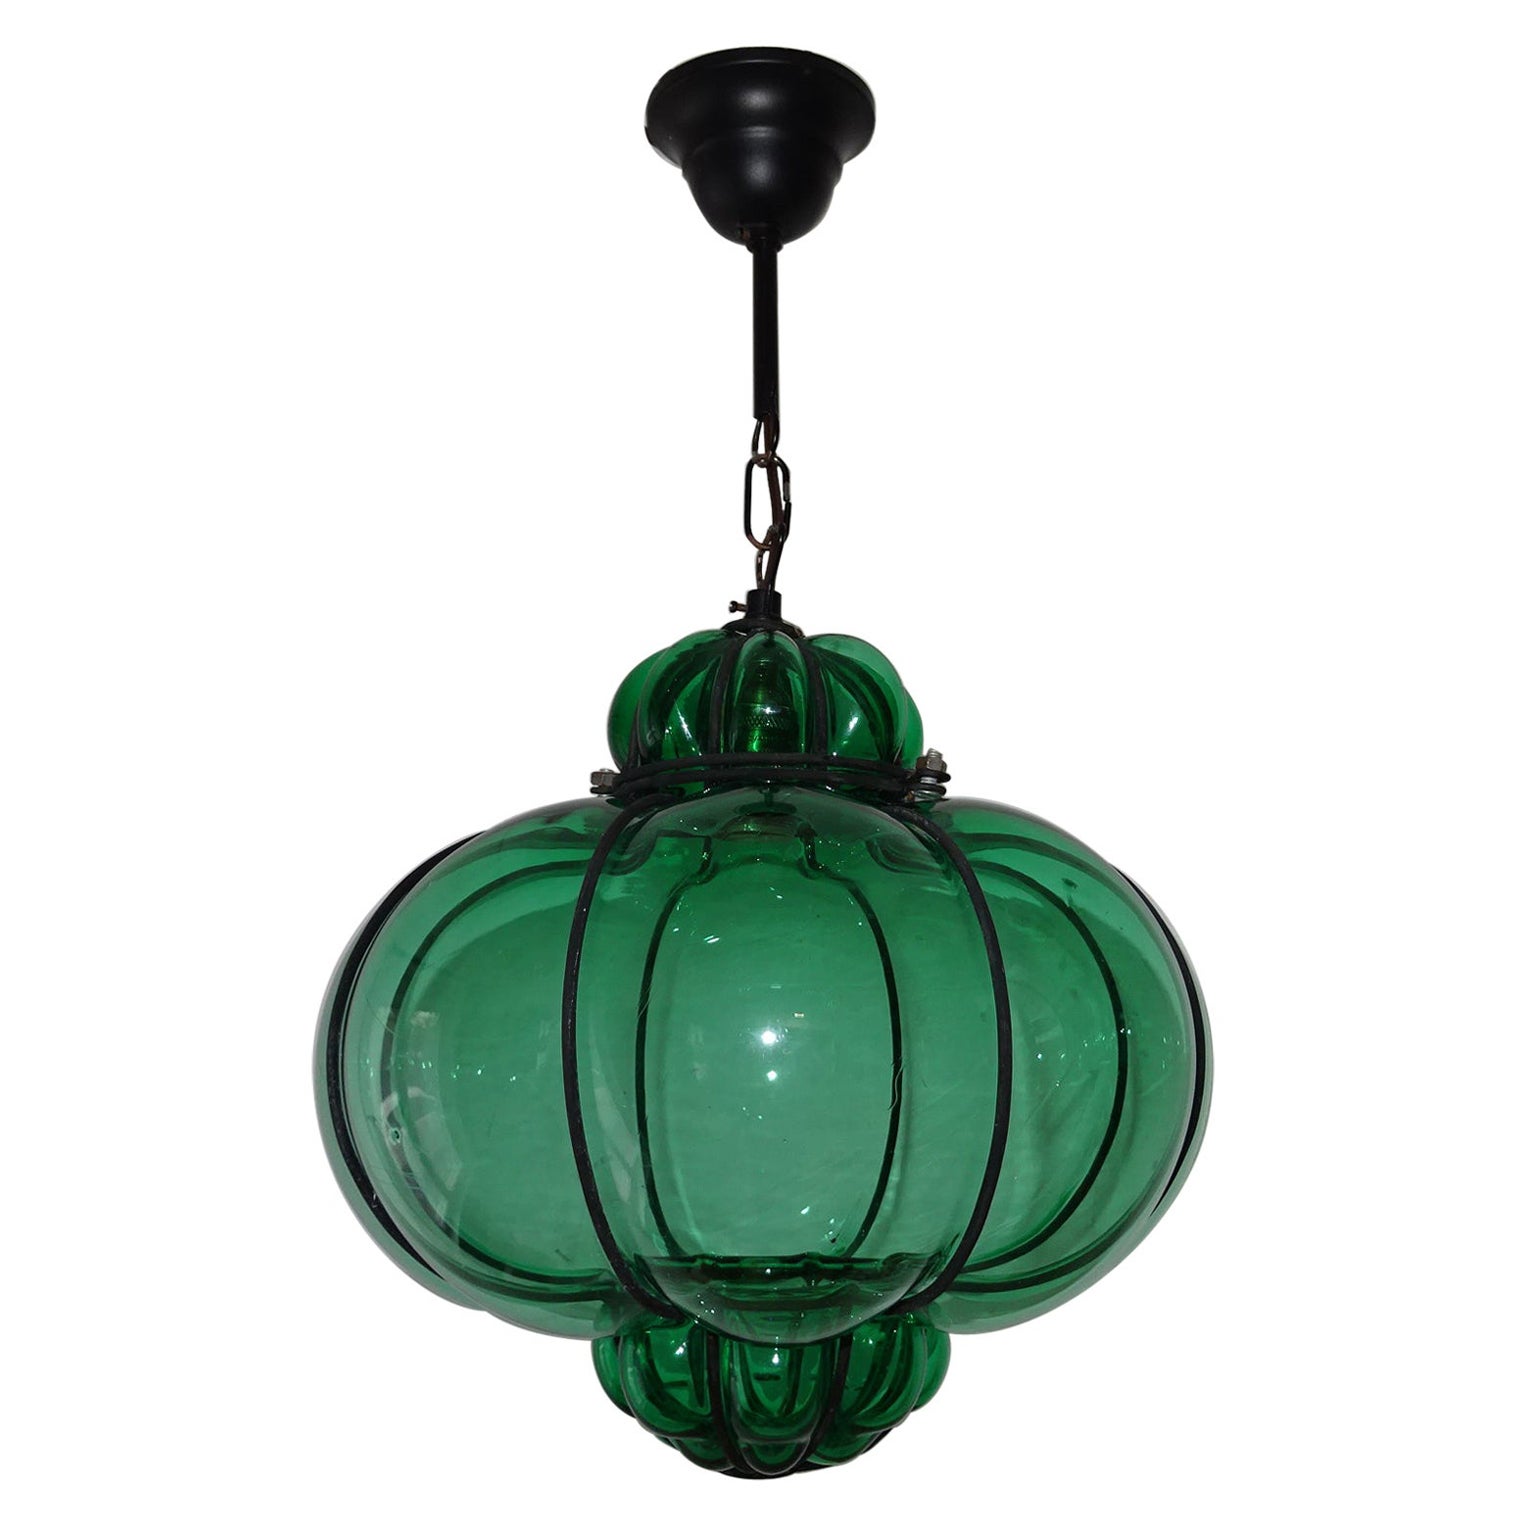 Lanterne soufflée à bulles vertes de Murano, style Greene & Greene